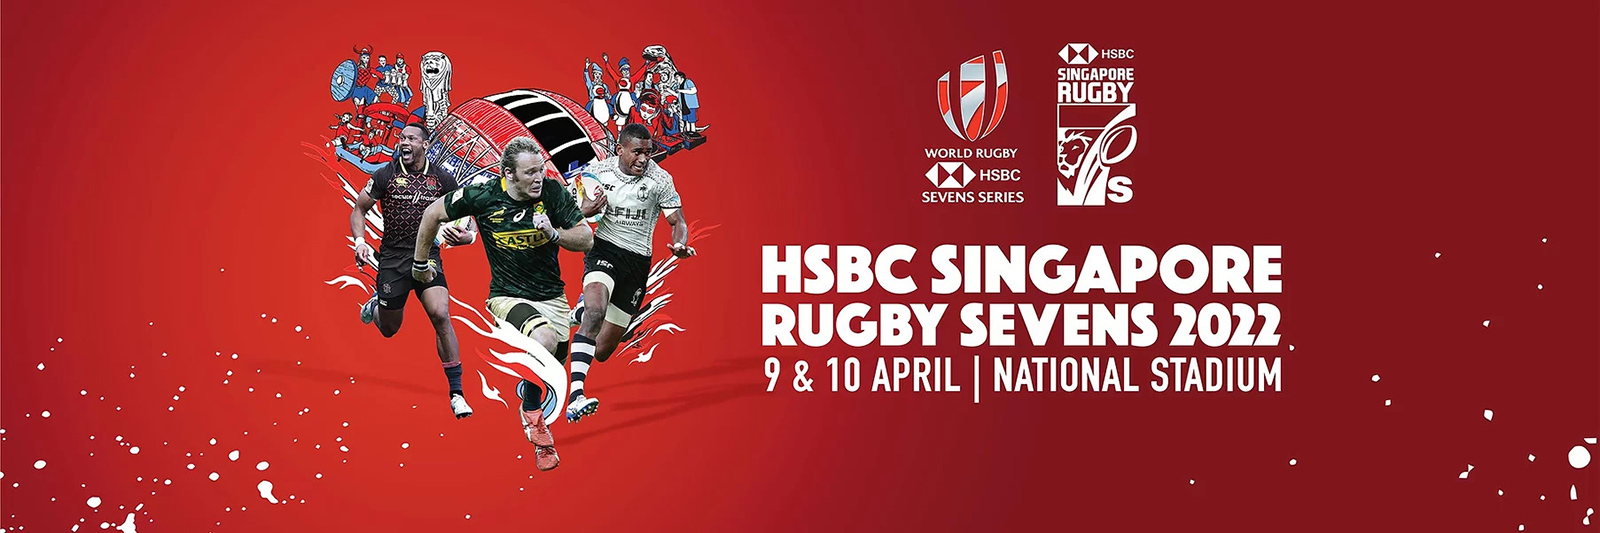 HSBC Singapore Rugby Sevens, April 9-10 at Singapore National Stadium